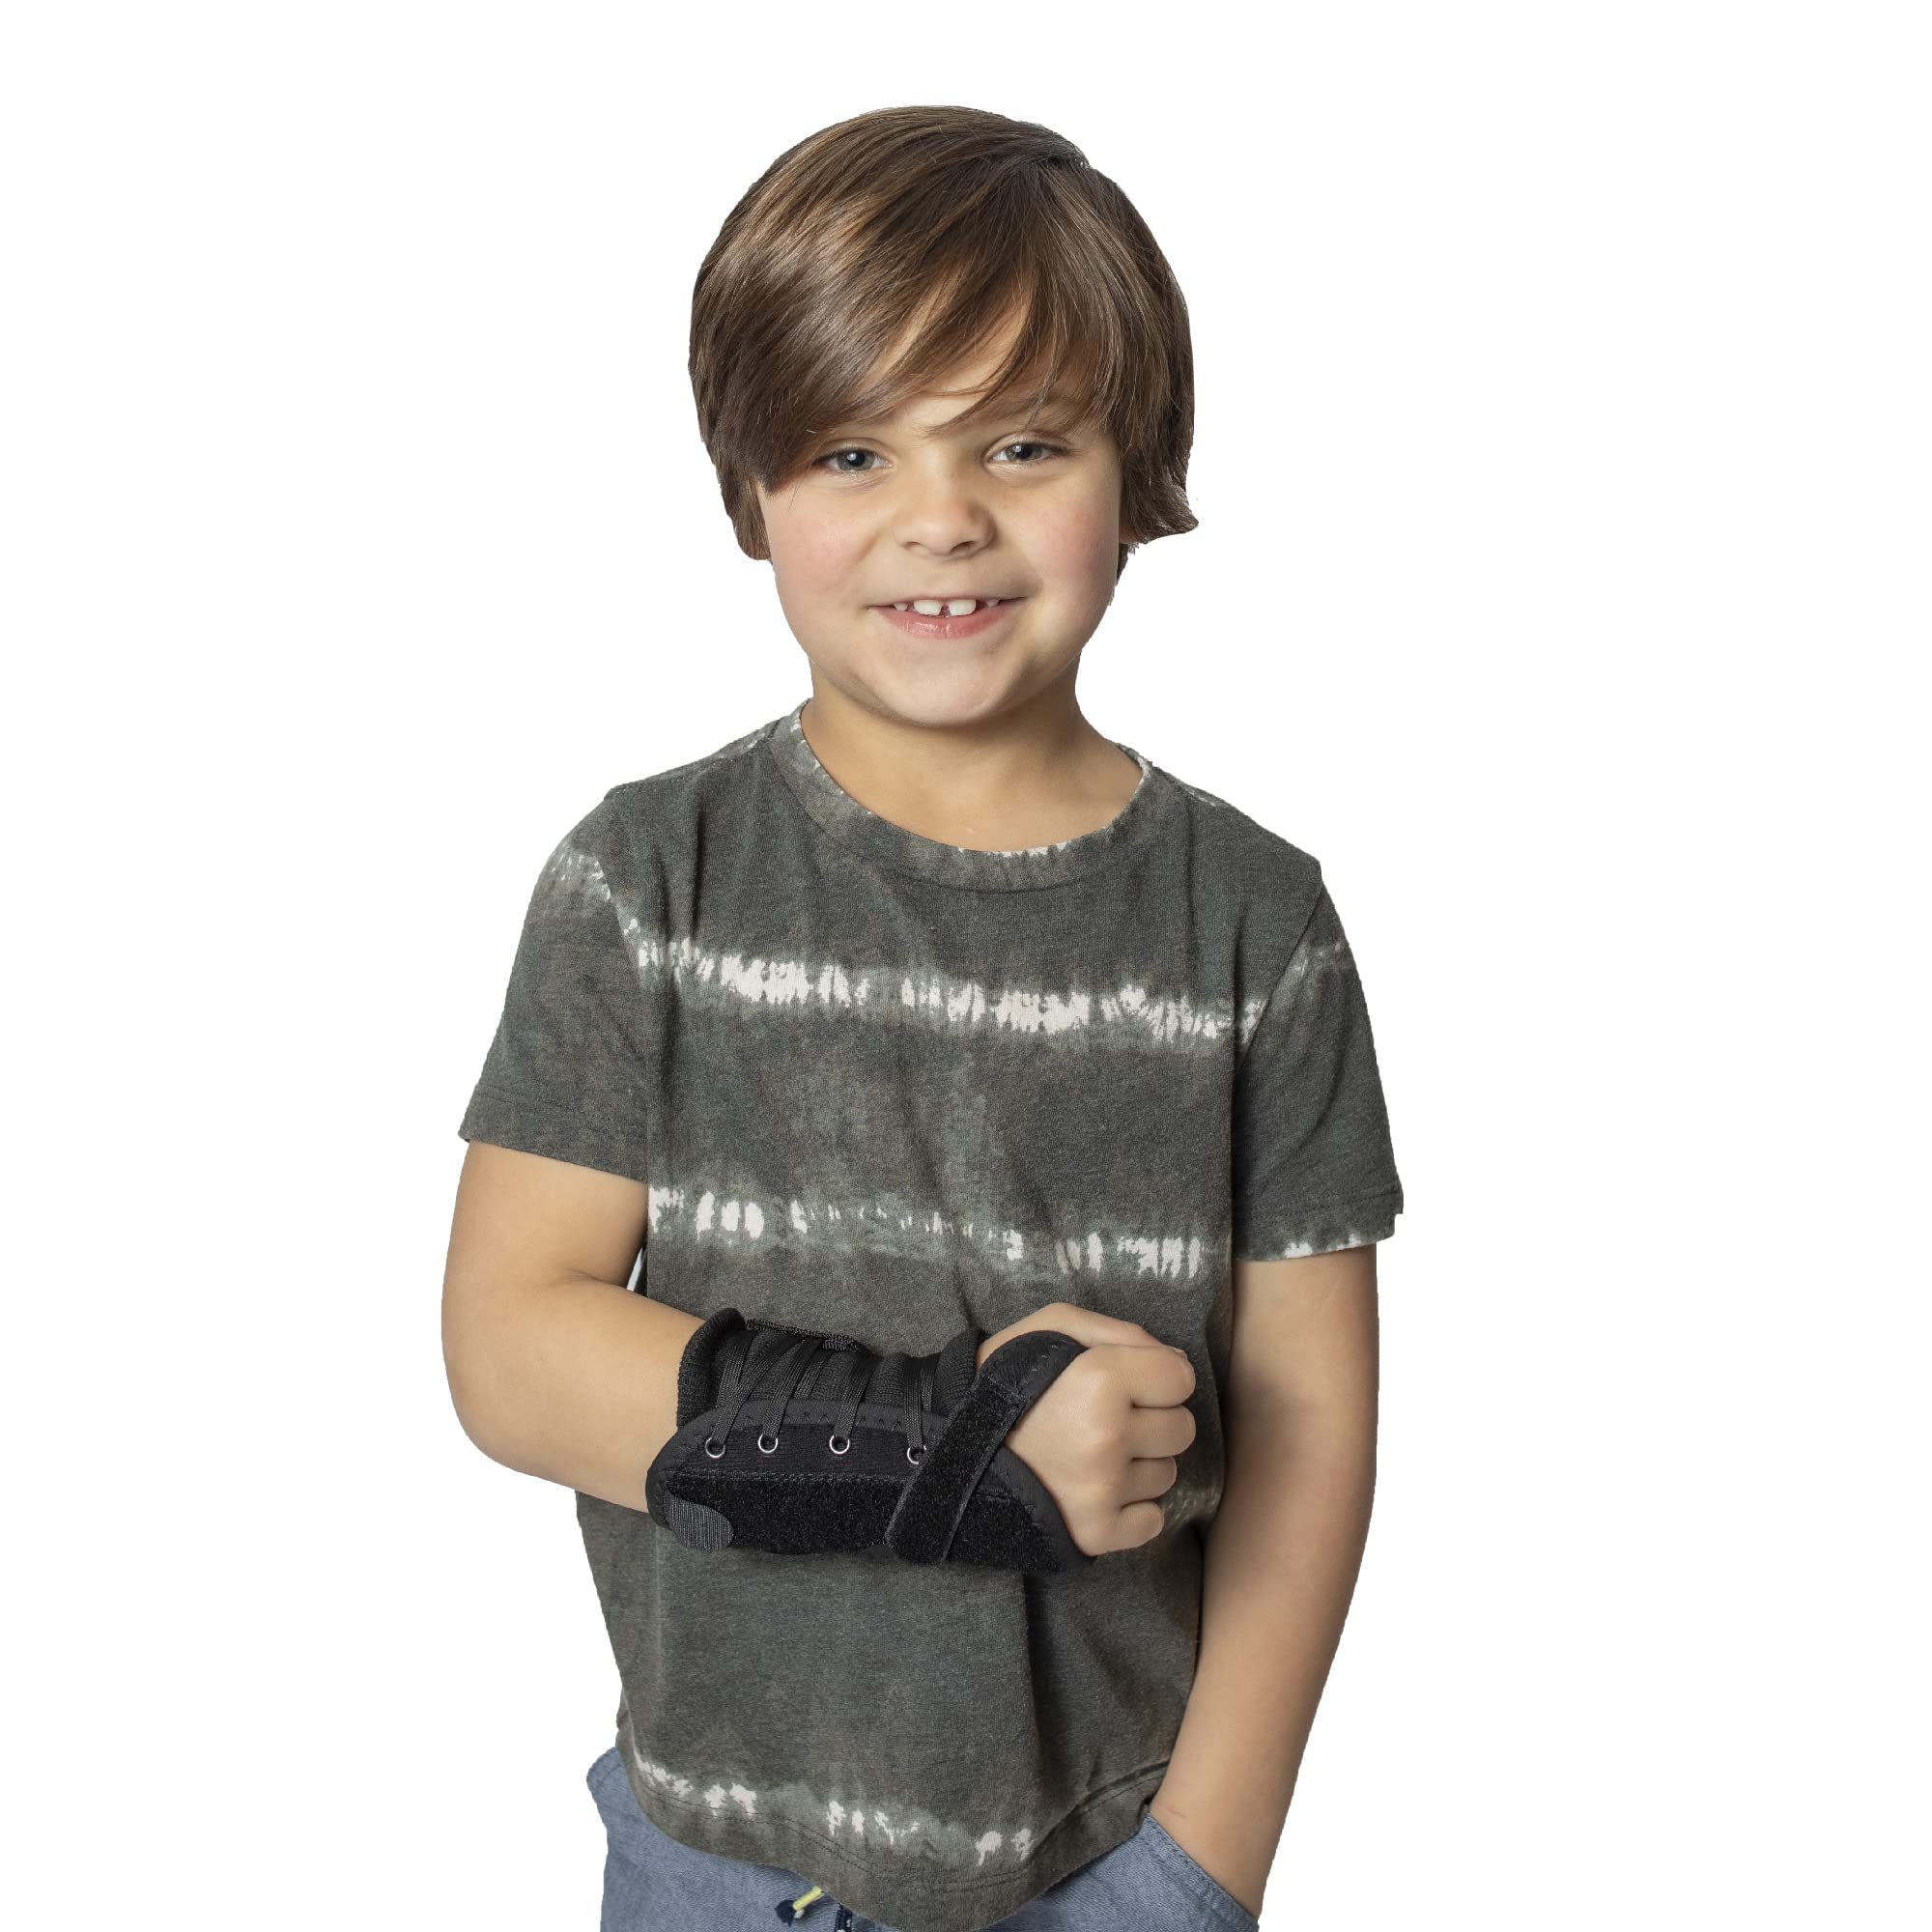 Brace Align Kid s Lace-Up Wrist Brace for Wrist Immobilization